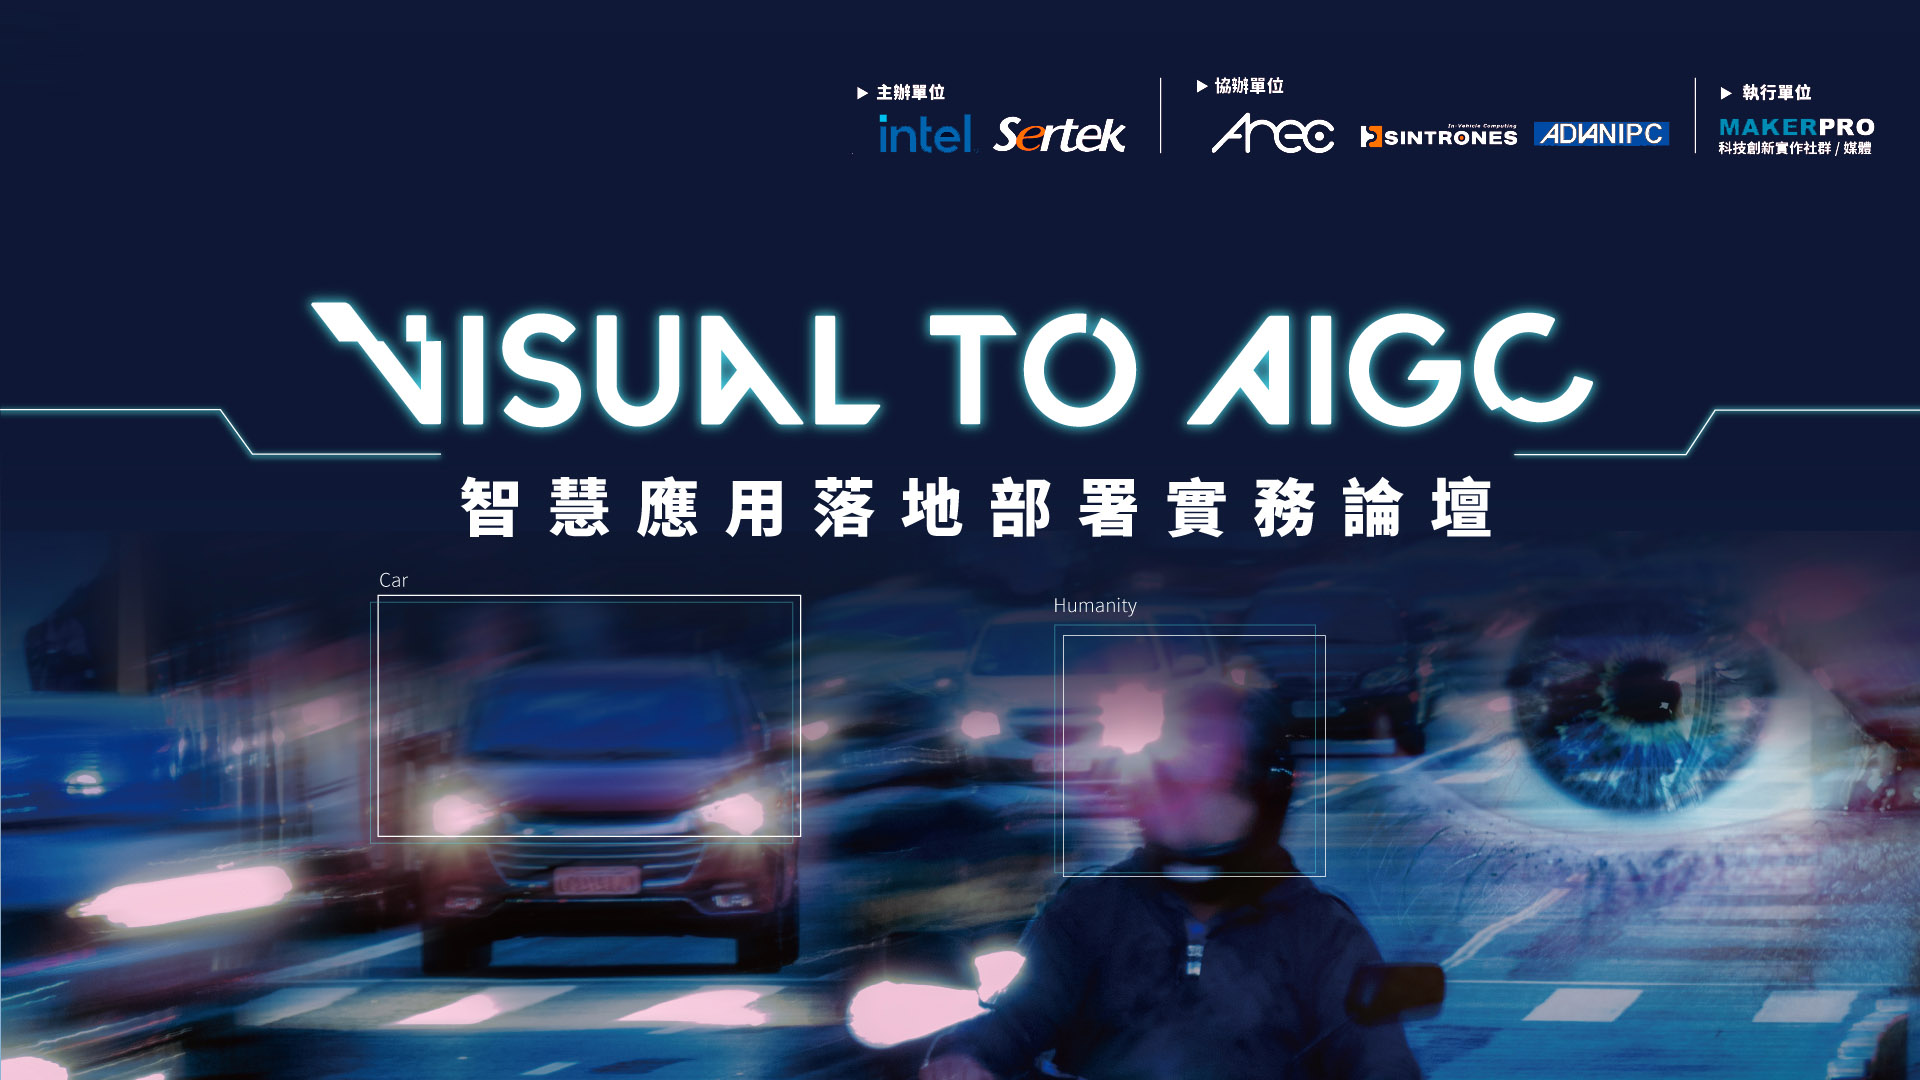 【Visual to AIGC】智慧應用落地部署實務論壇